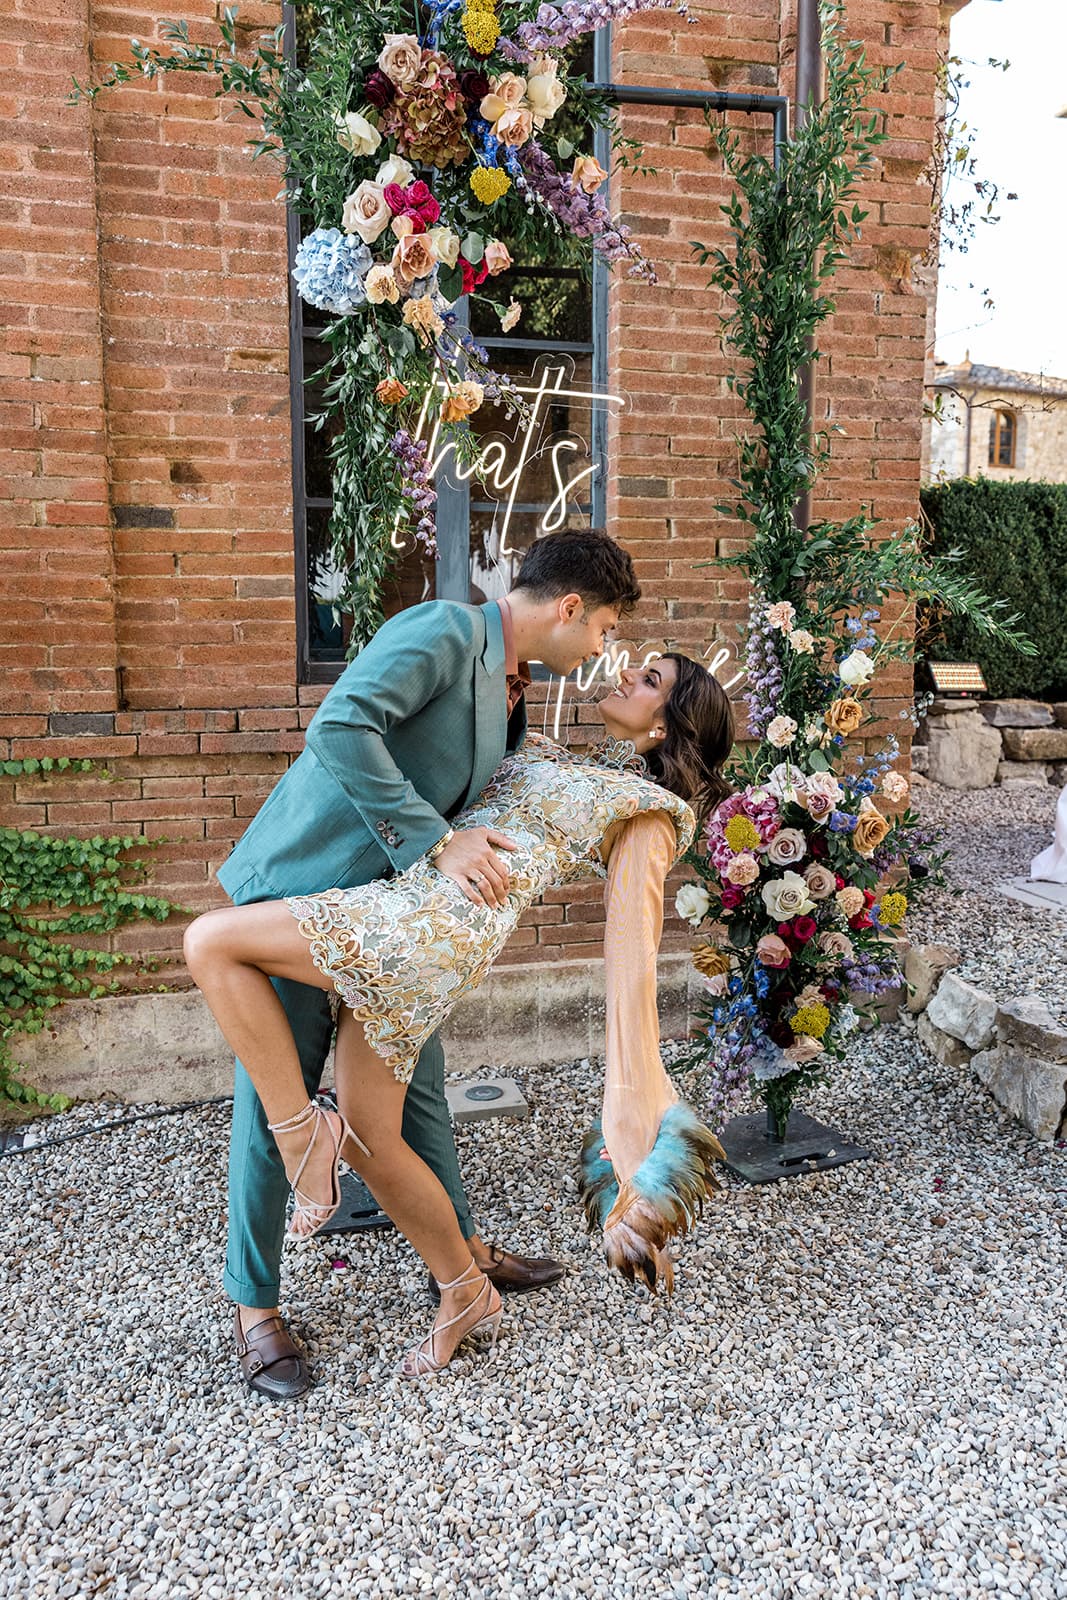 Man dips woman in kiss at wedding anniversary reception